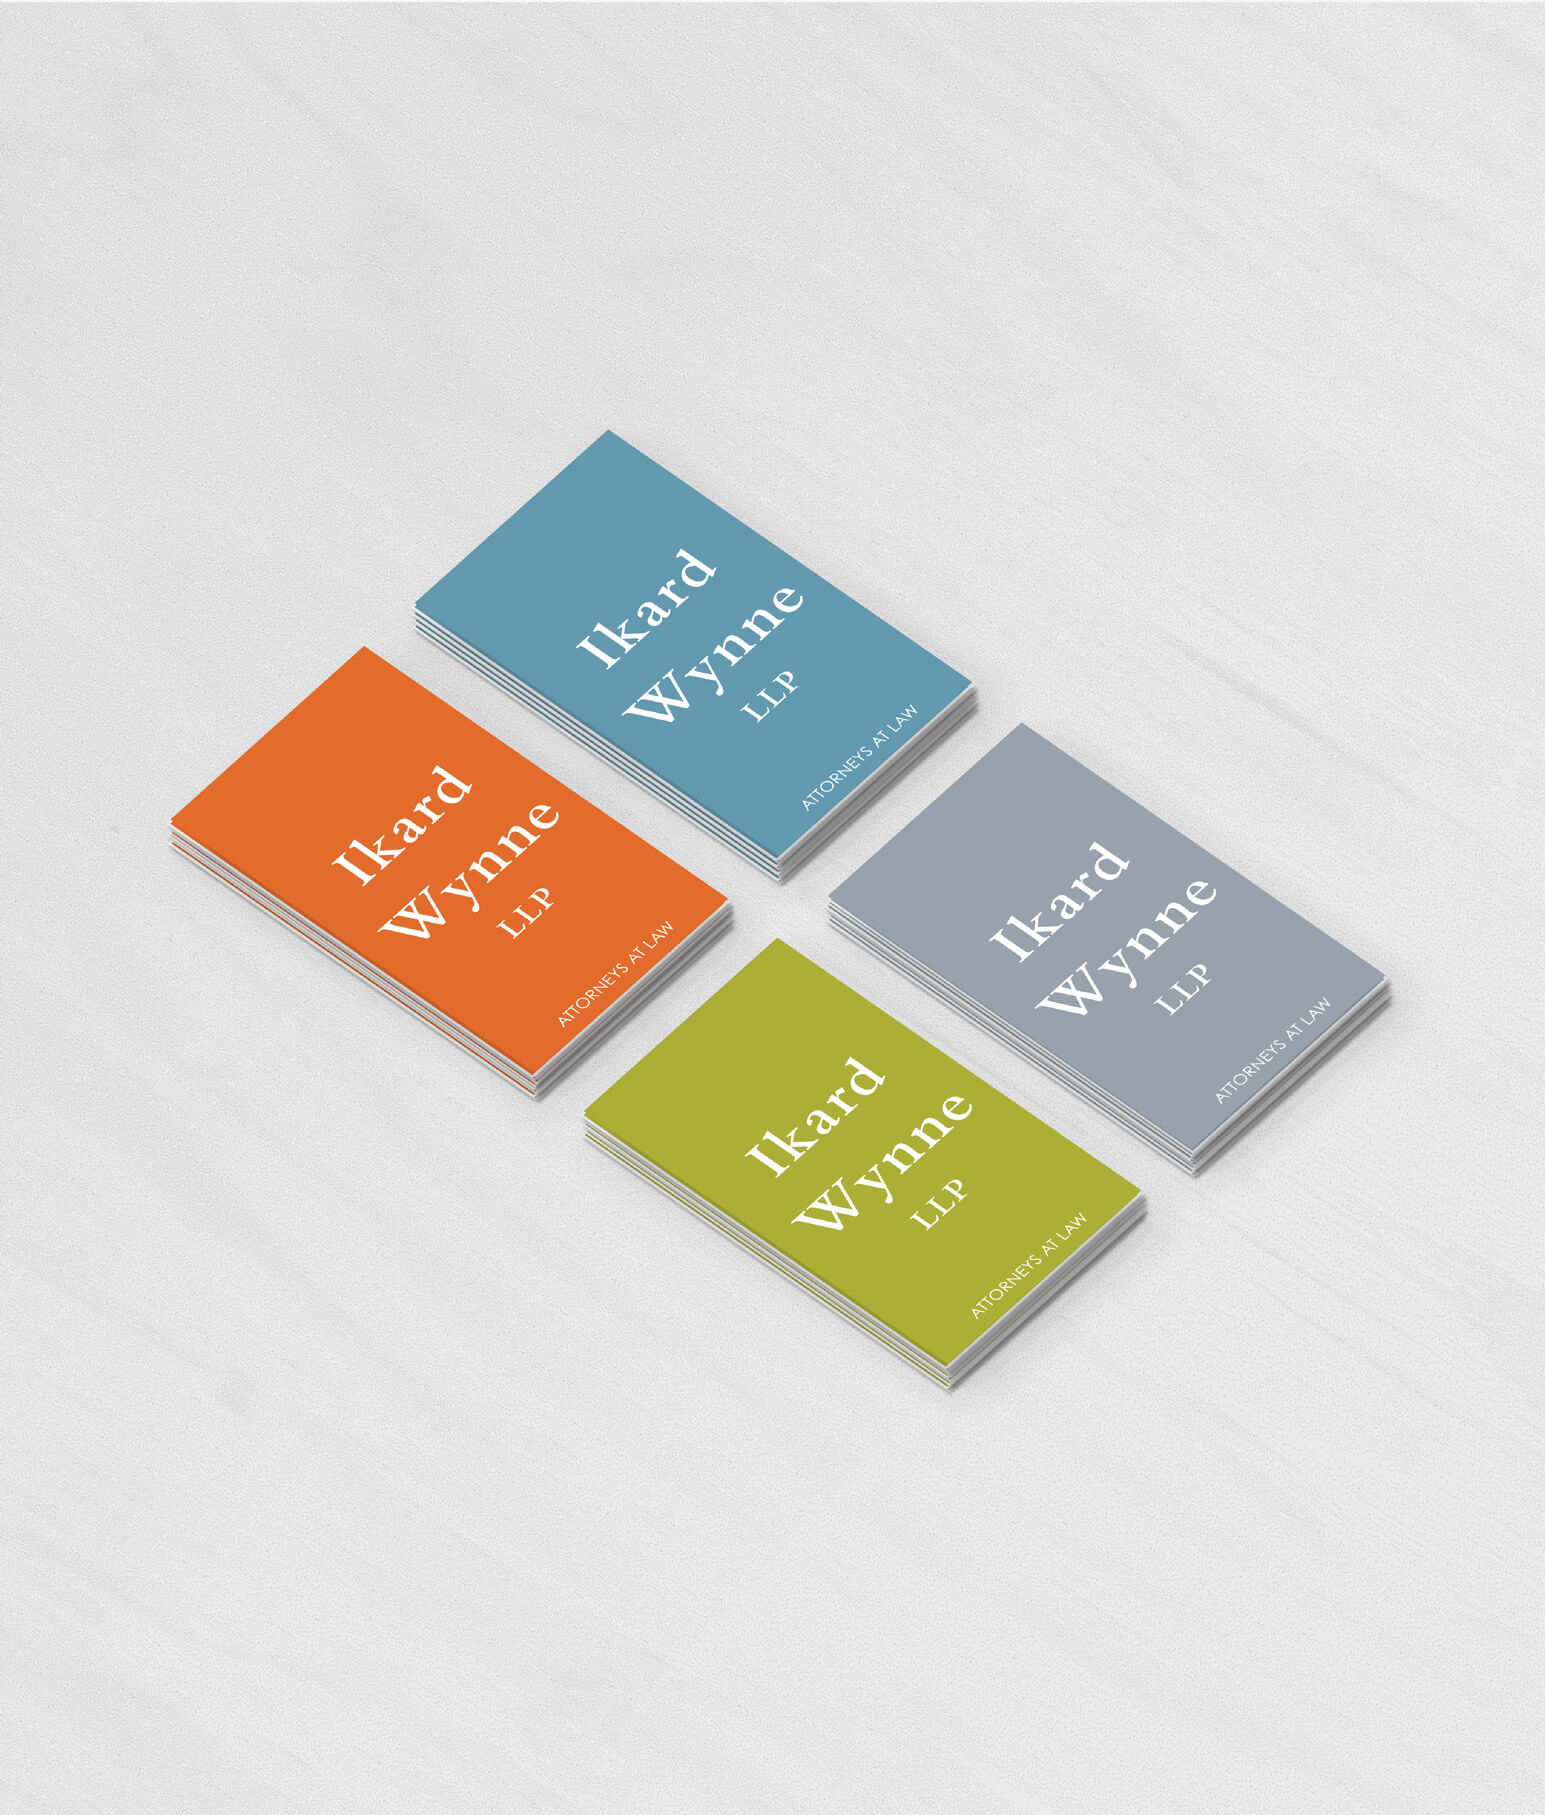 Ikard Wynne LLP business card design